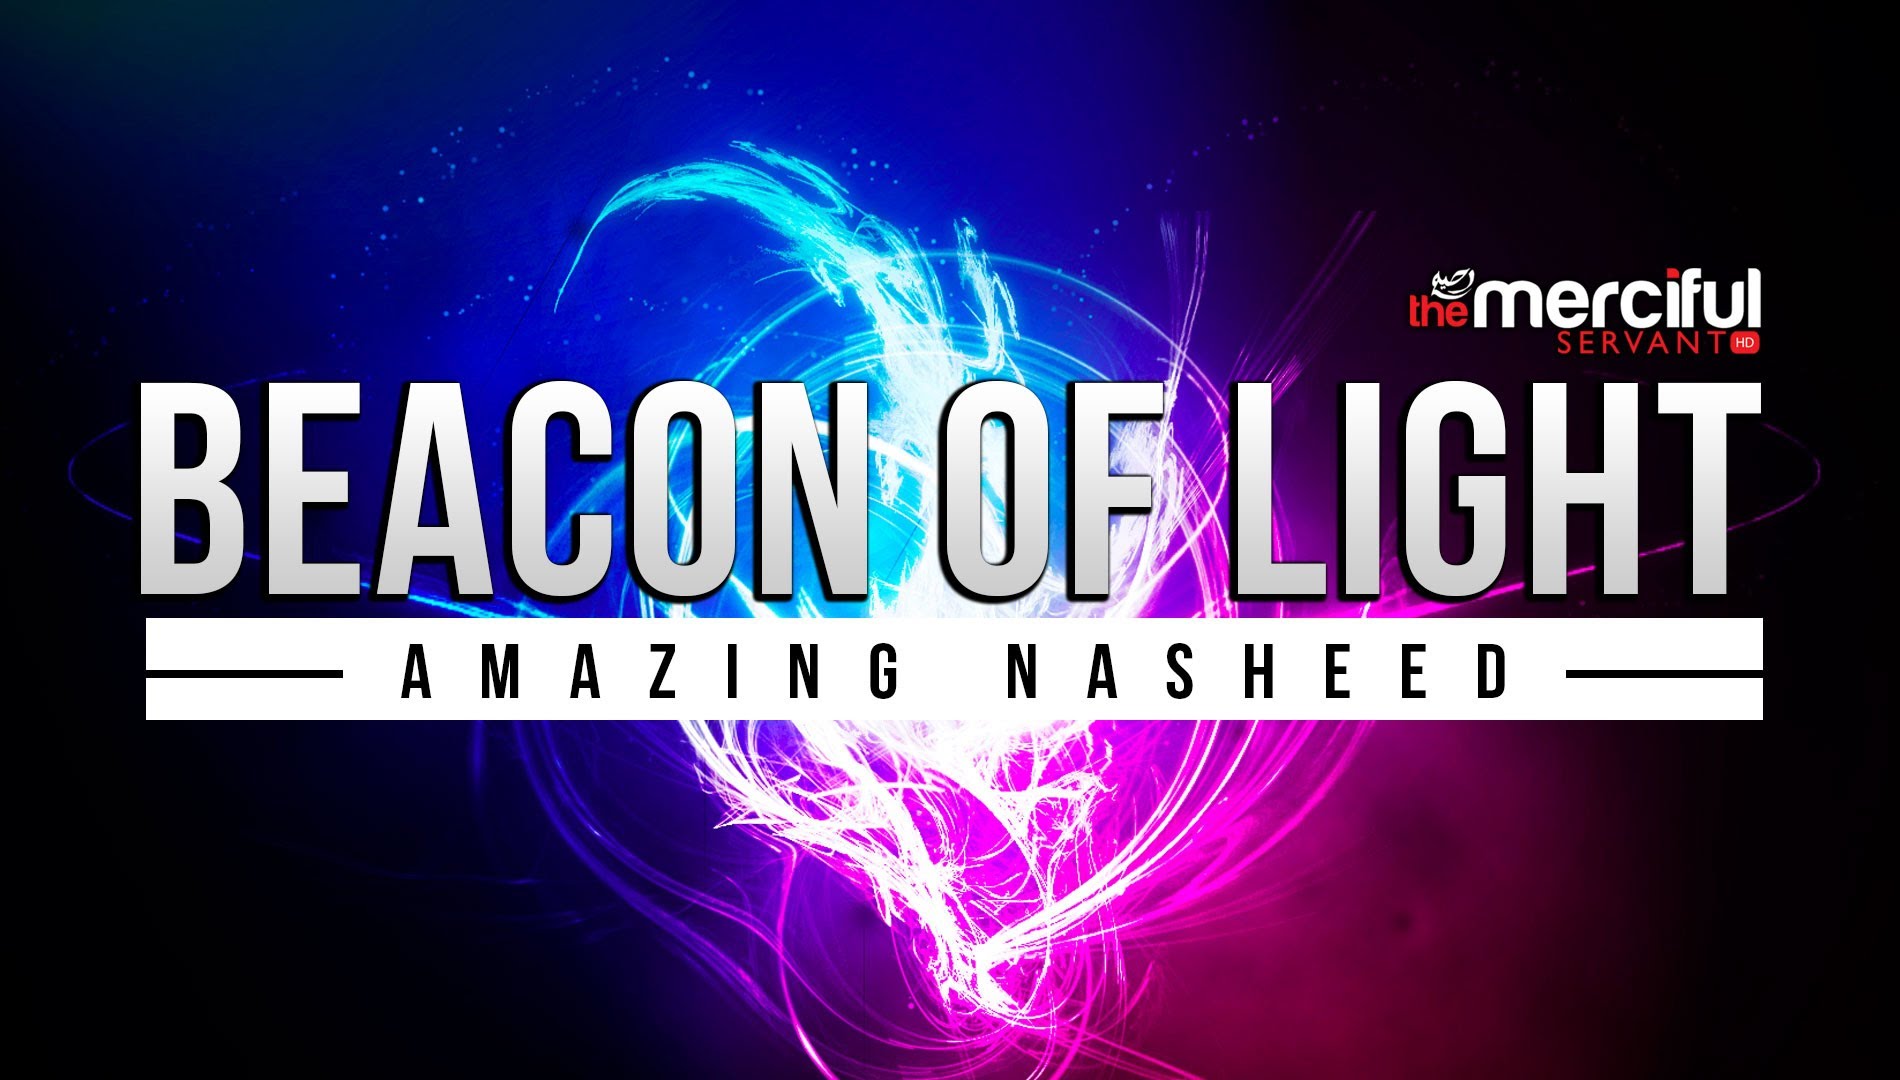 Beacon of Light - Amazing Nasheed - MercifulServant